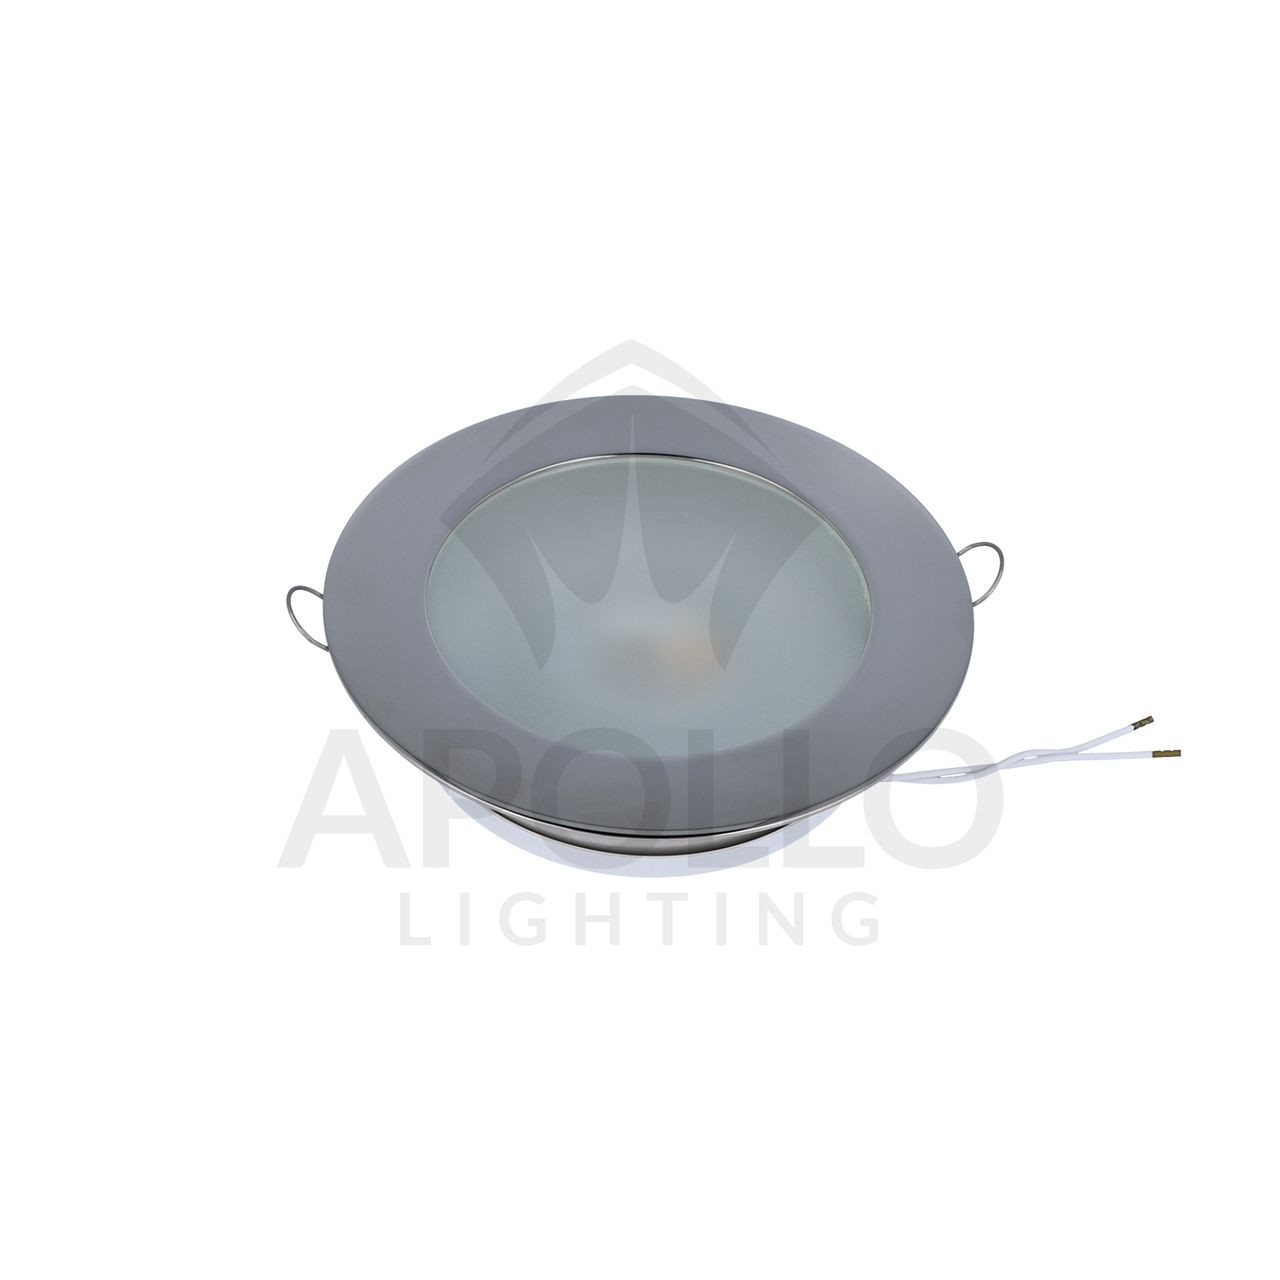 DRSA - Jamaica Downlight - G4 socket - Apollo Lighting